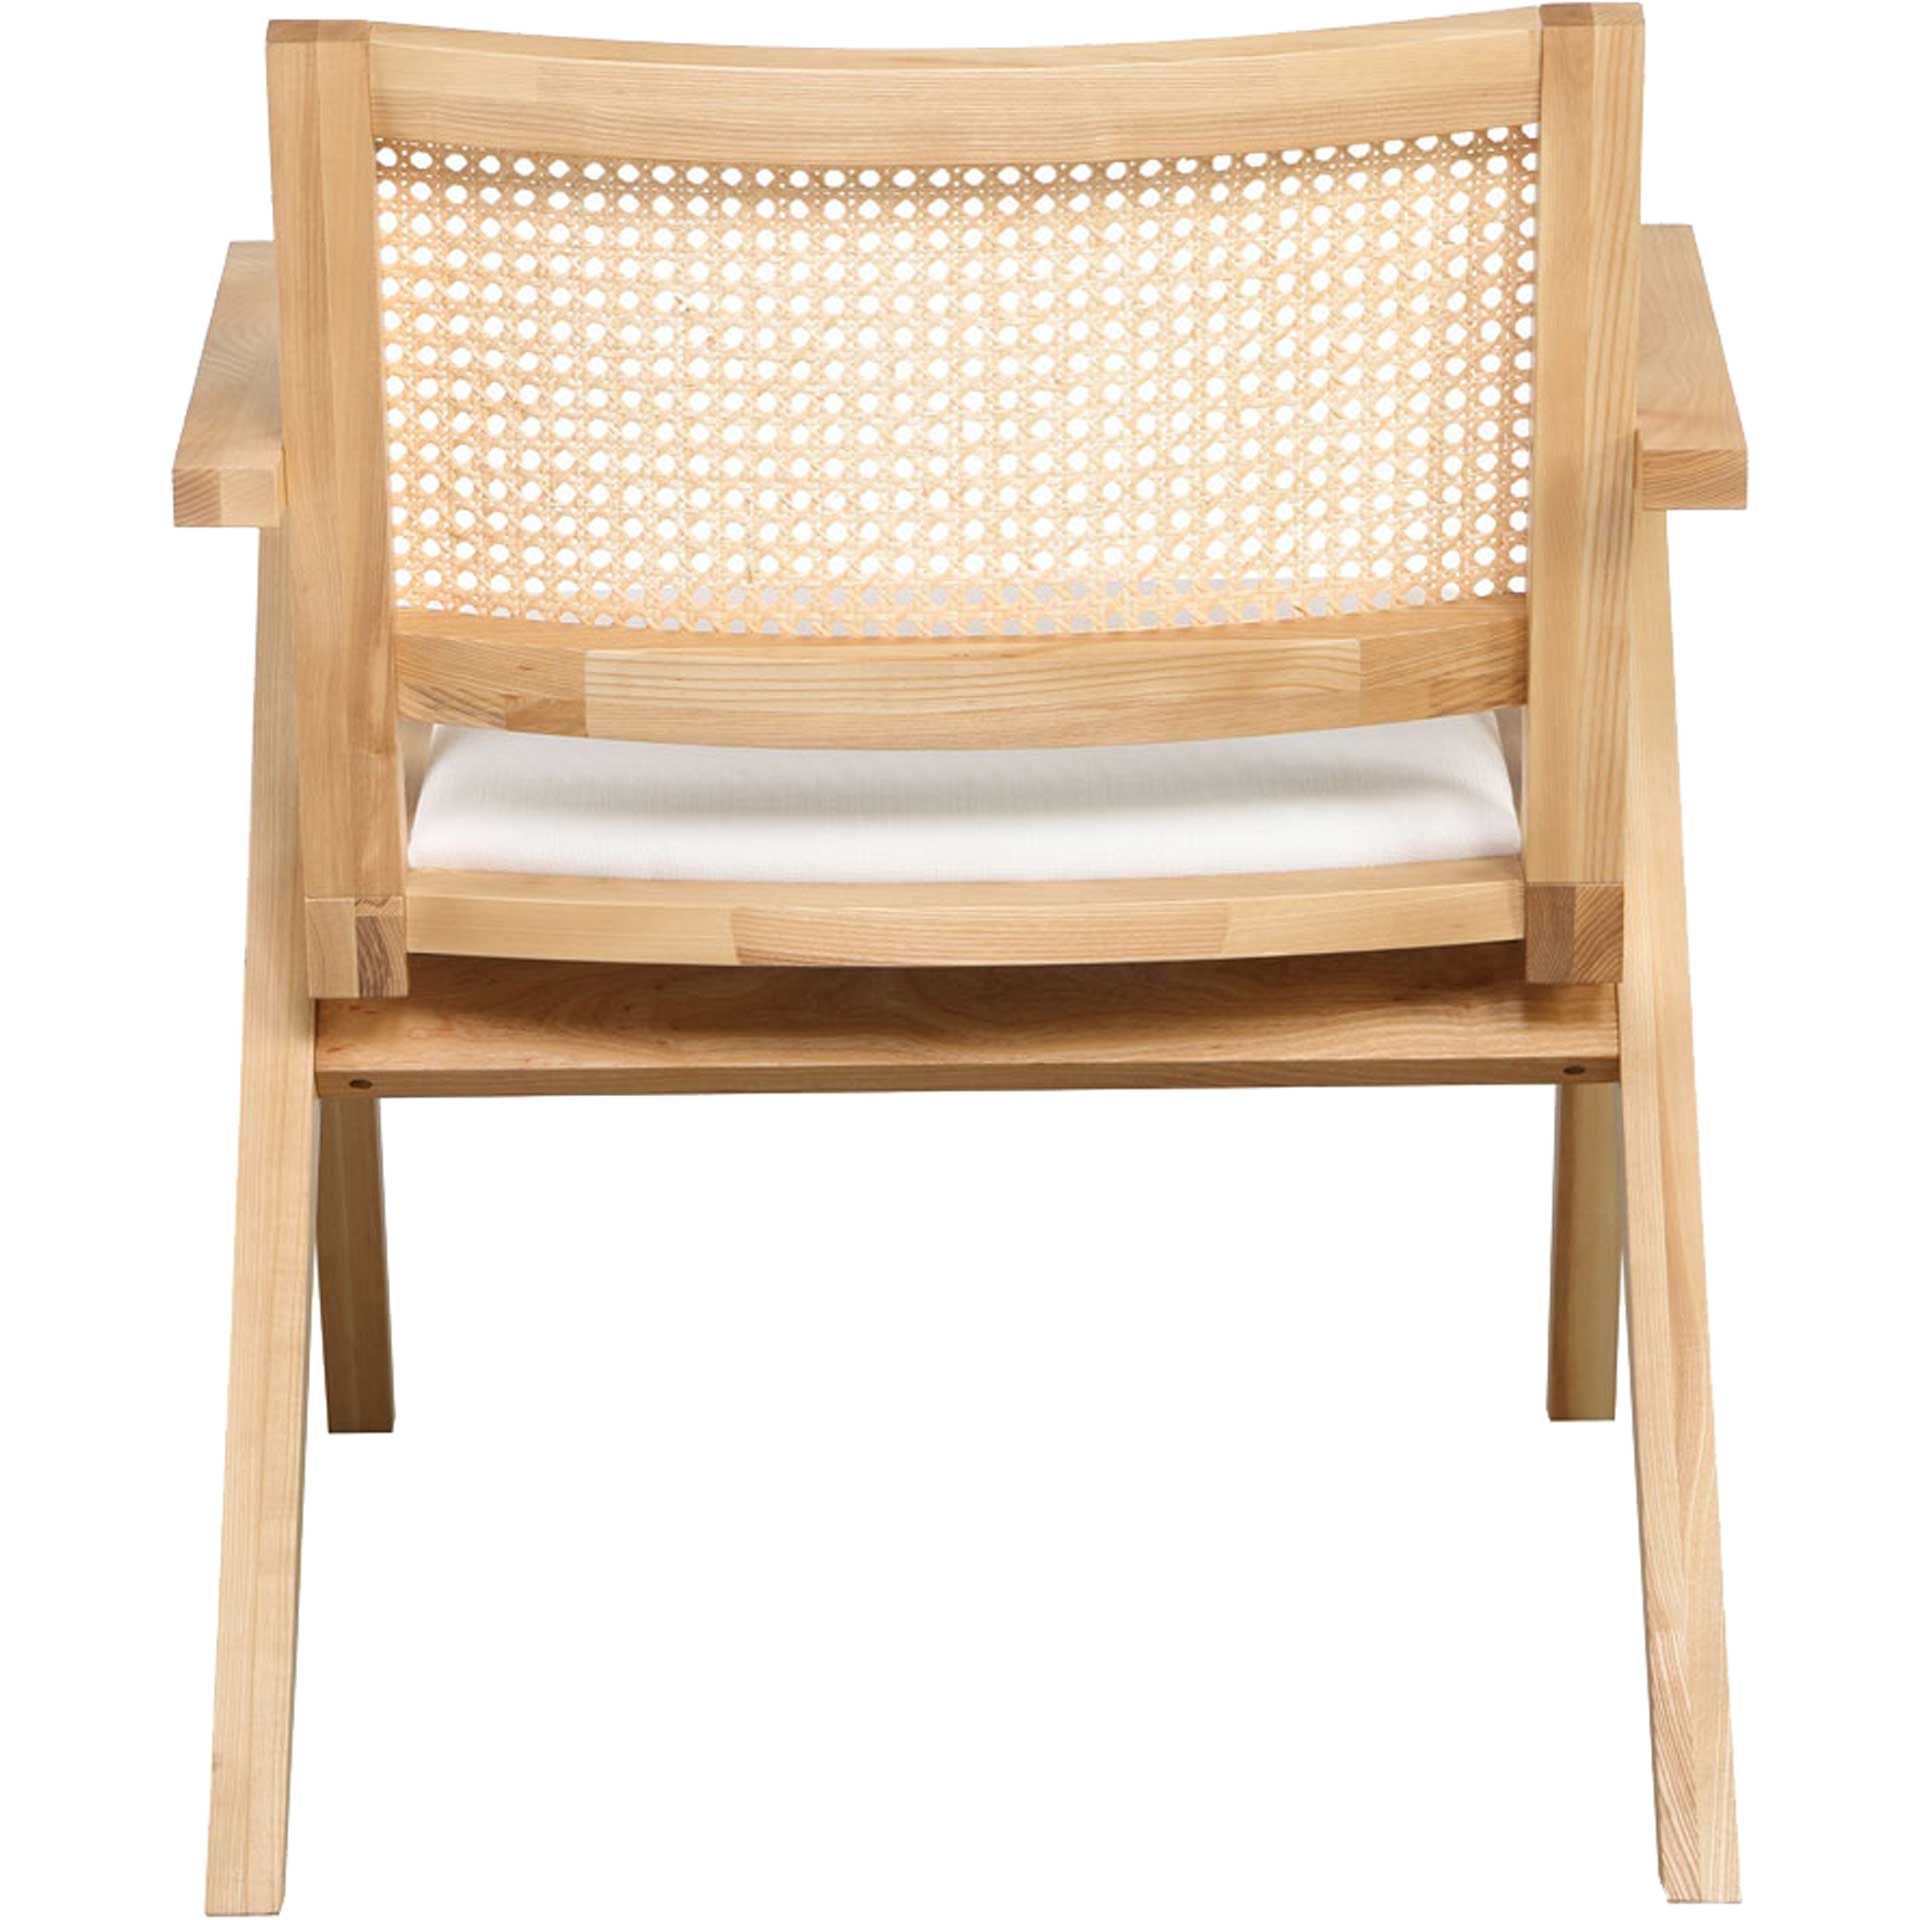 Kral Rattan Accent Chair Natural/White